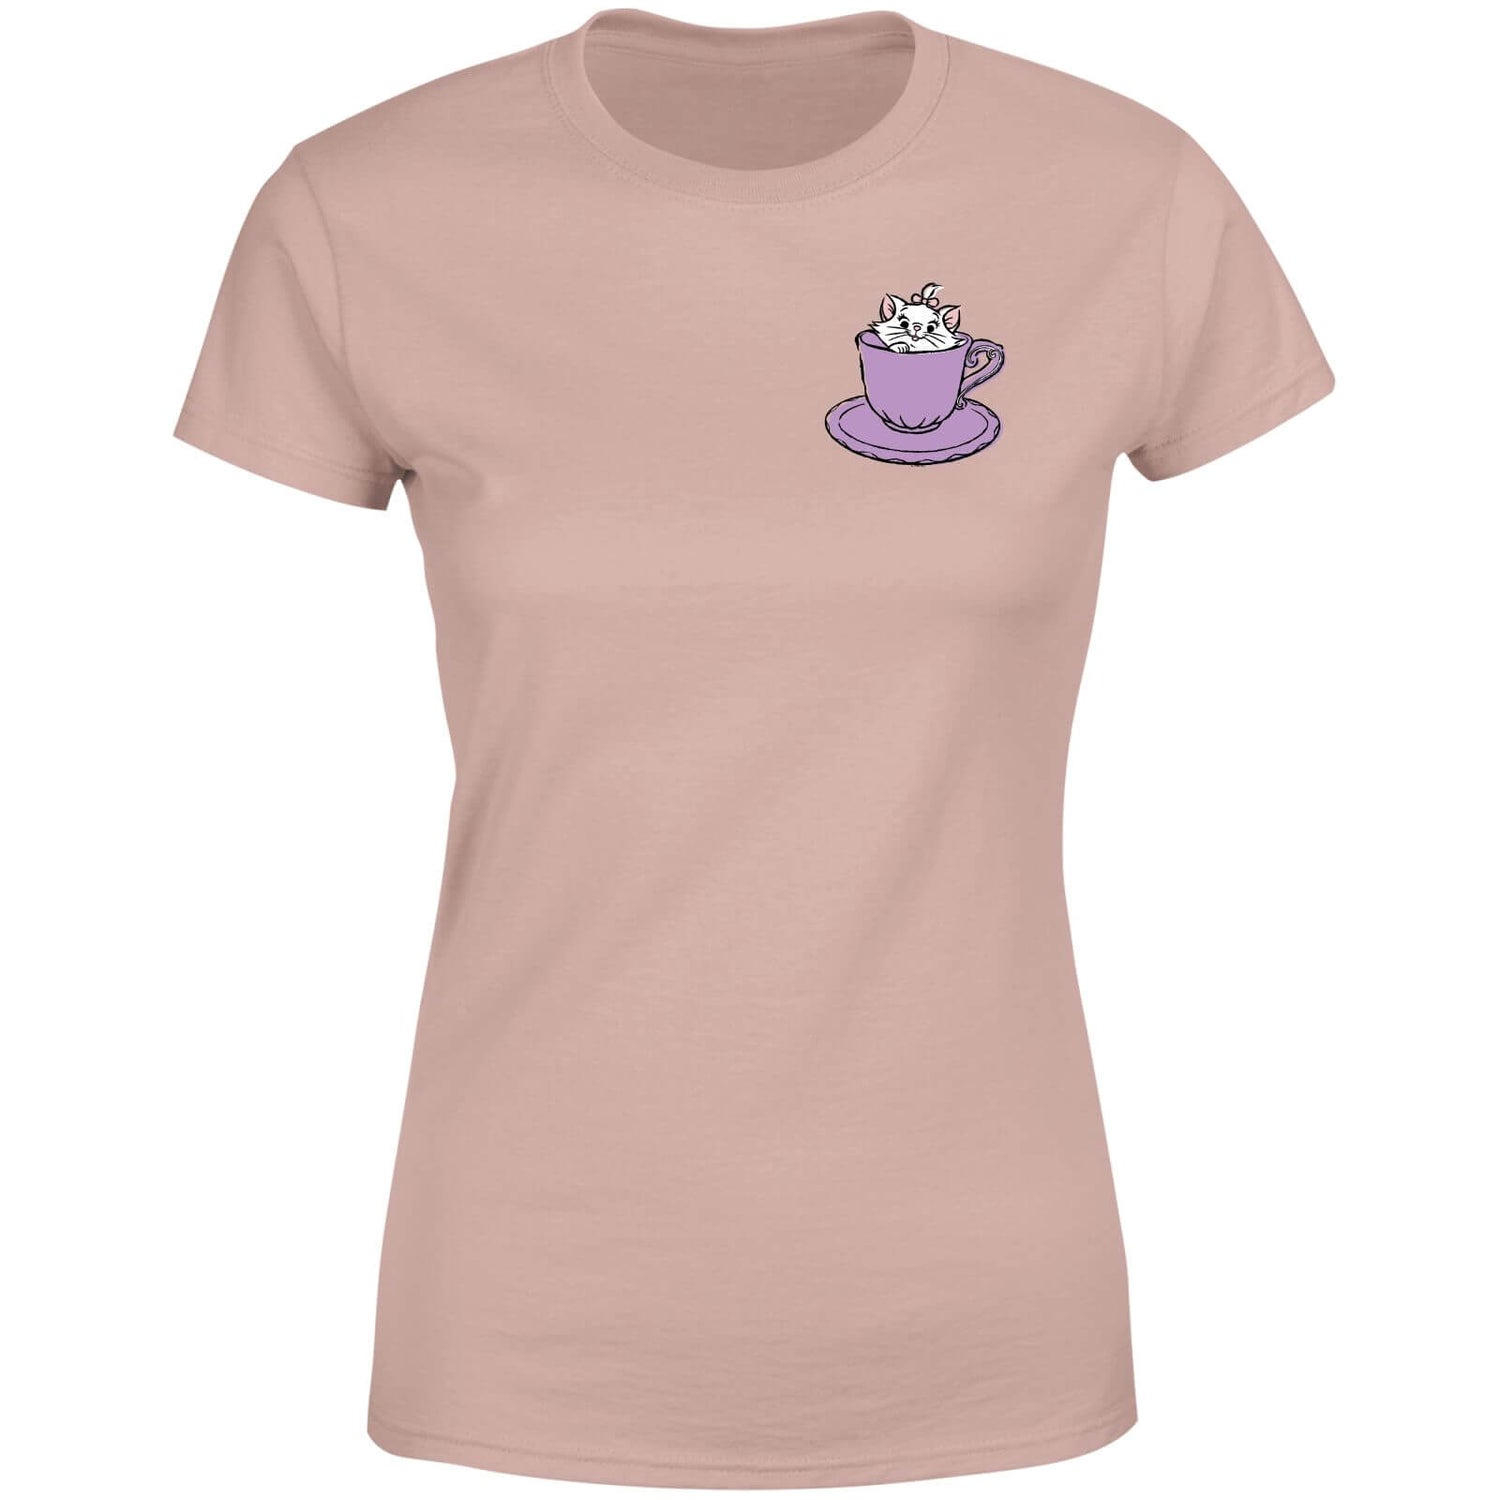 Disney Aristocats Marie Teacup Women's T-Shirt - Dusty Pink - XL - Dusty pink